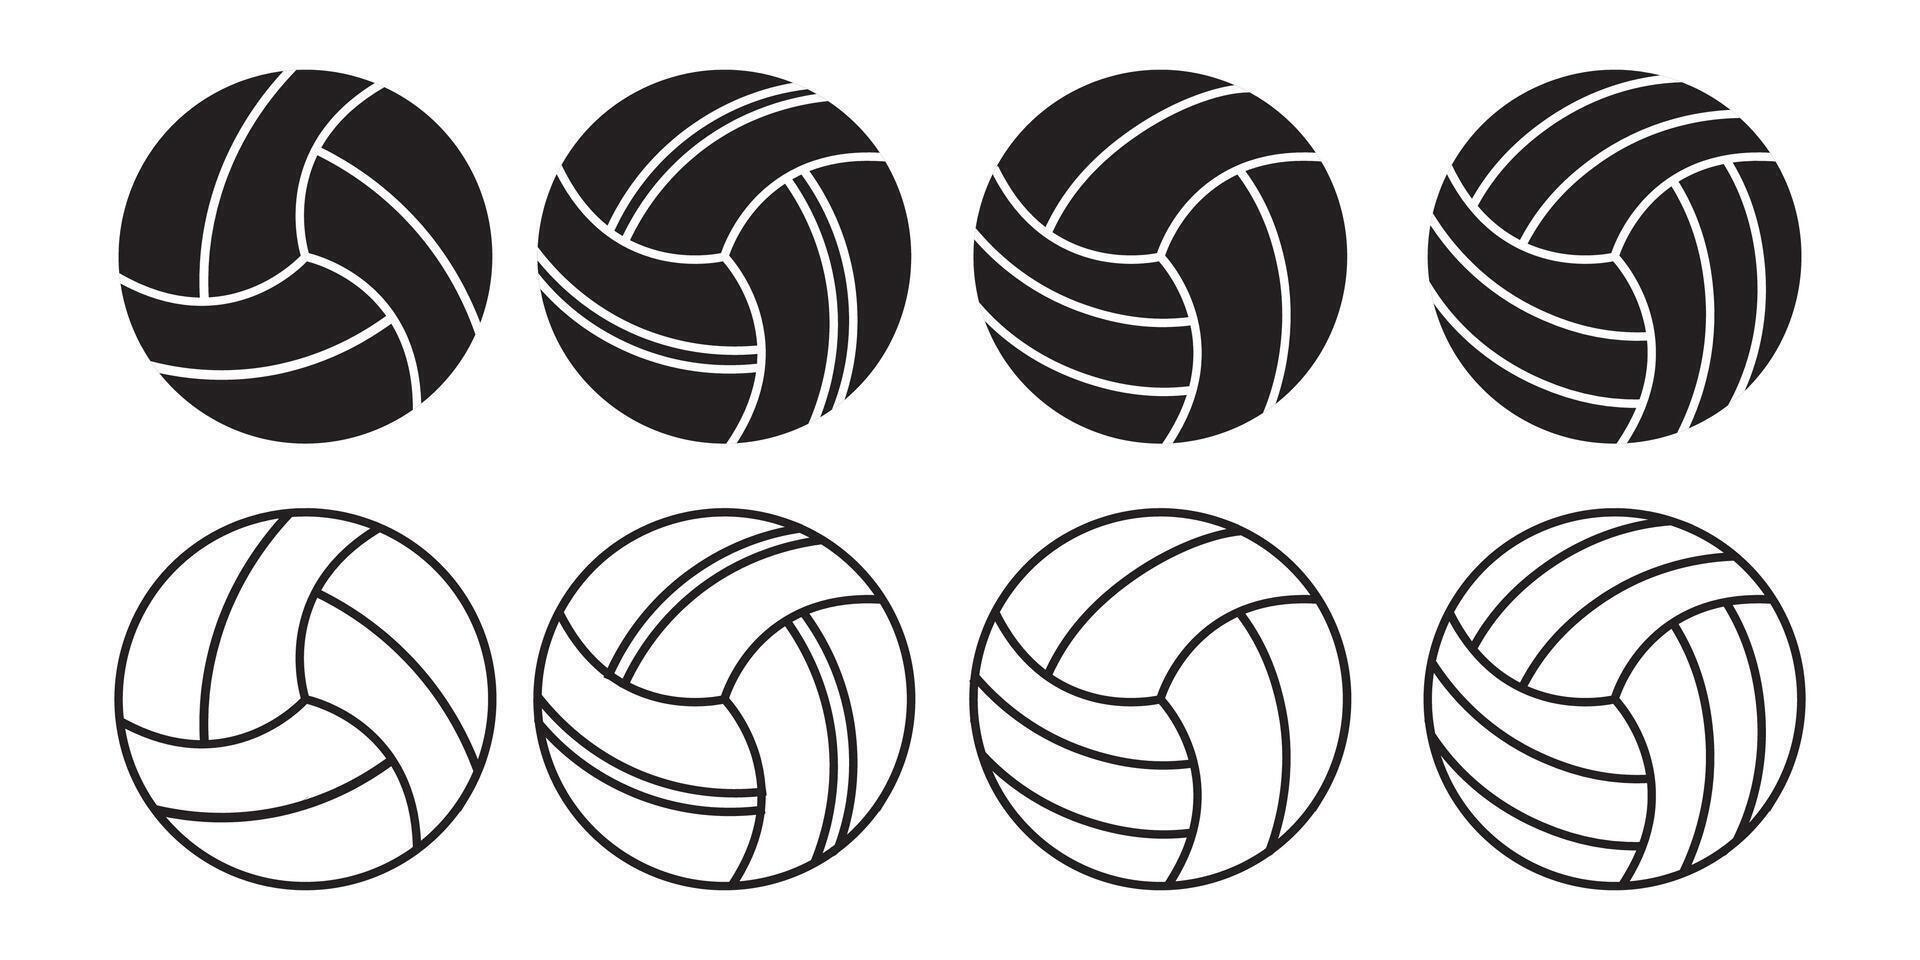 voleibol ícones definir. Preto voleibol bola símbolo conjunto do voleibol vetor ícones para rede, aplicativo projeto,